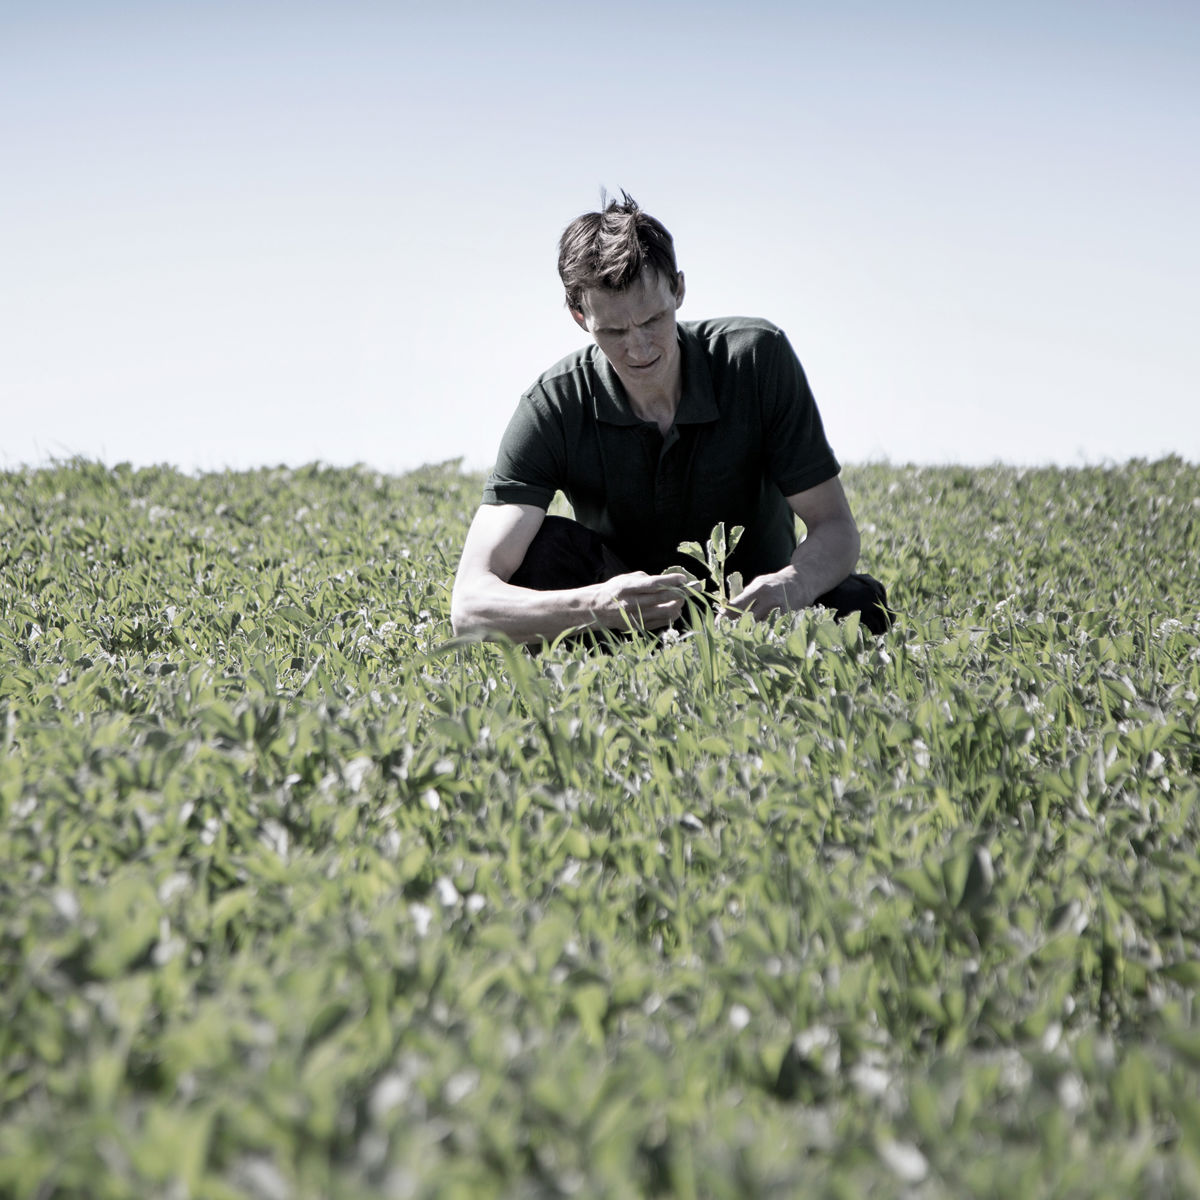 A farmer inspecting a crop in a field